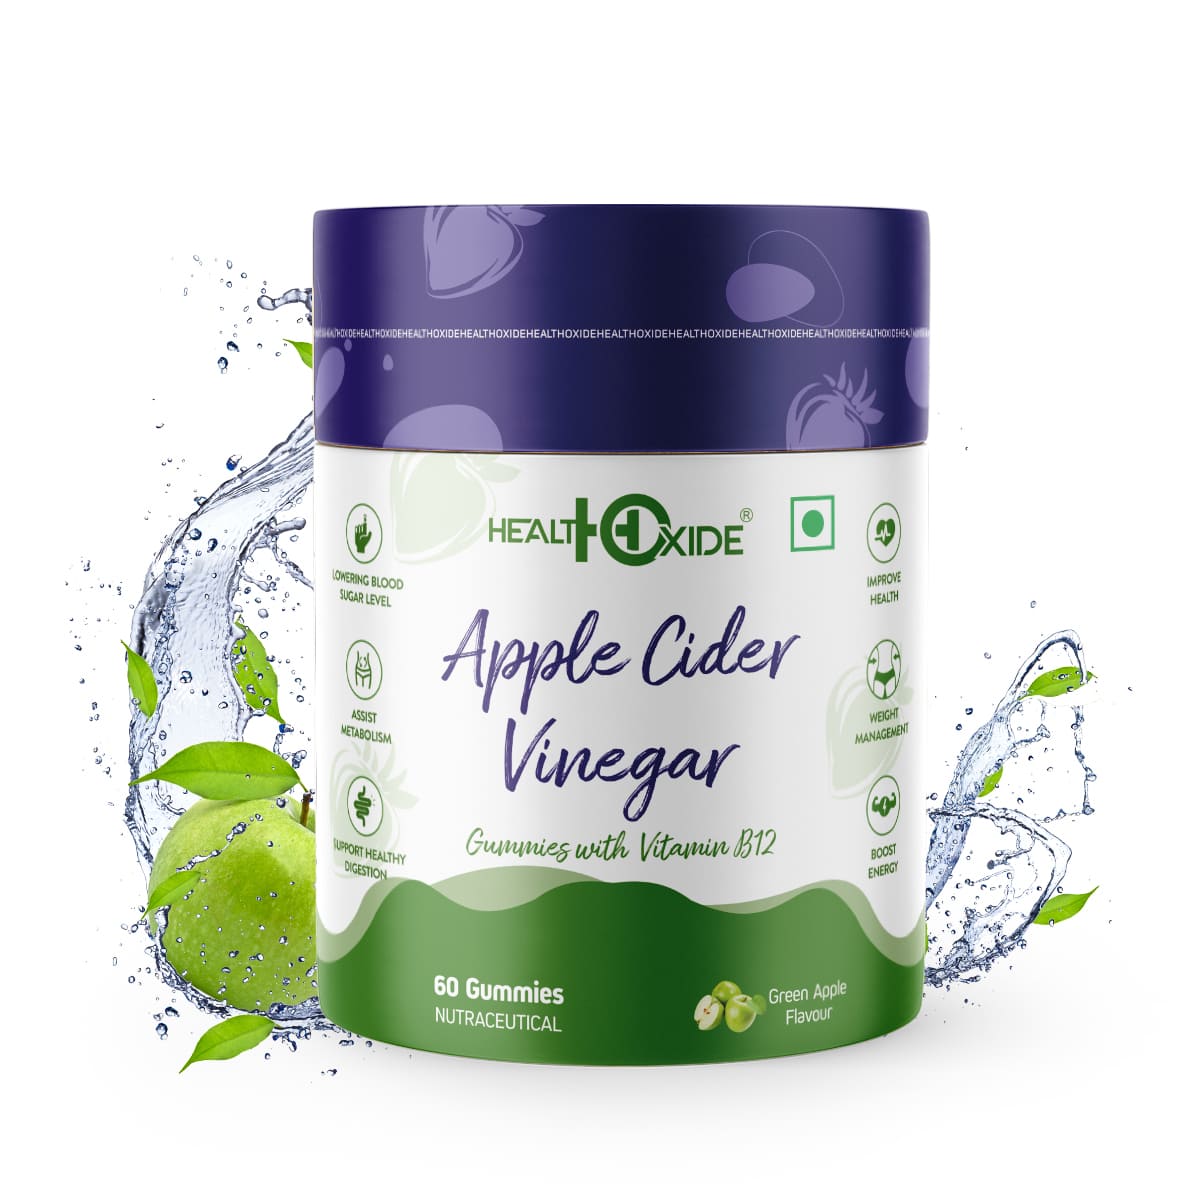 Healthoxide Apple cider vinegar gummies with vitamin B12 for weight loss/ green apple flavoured/ 60 gummies